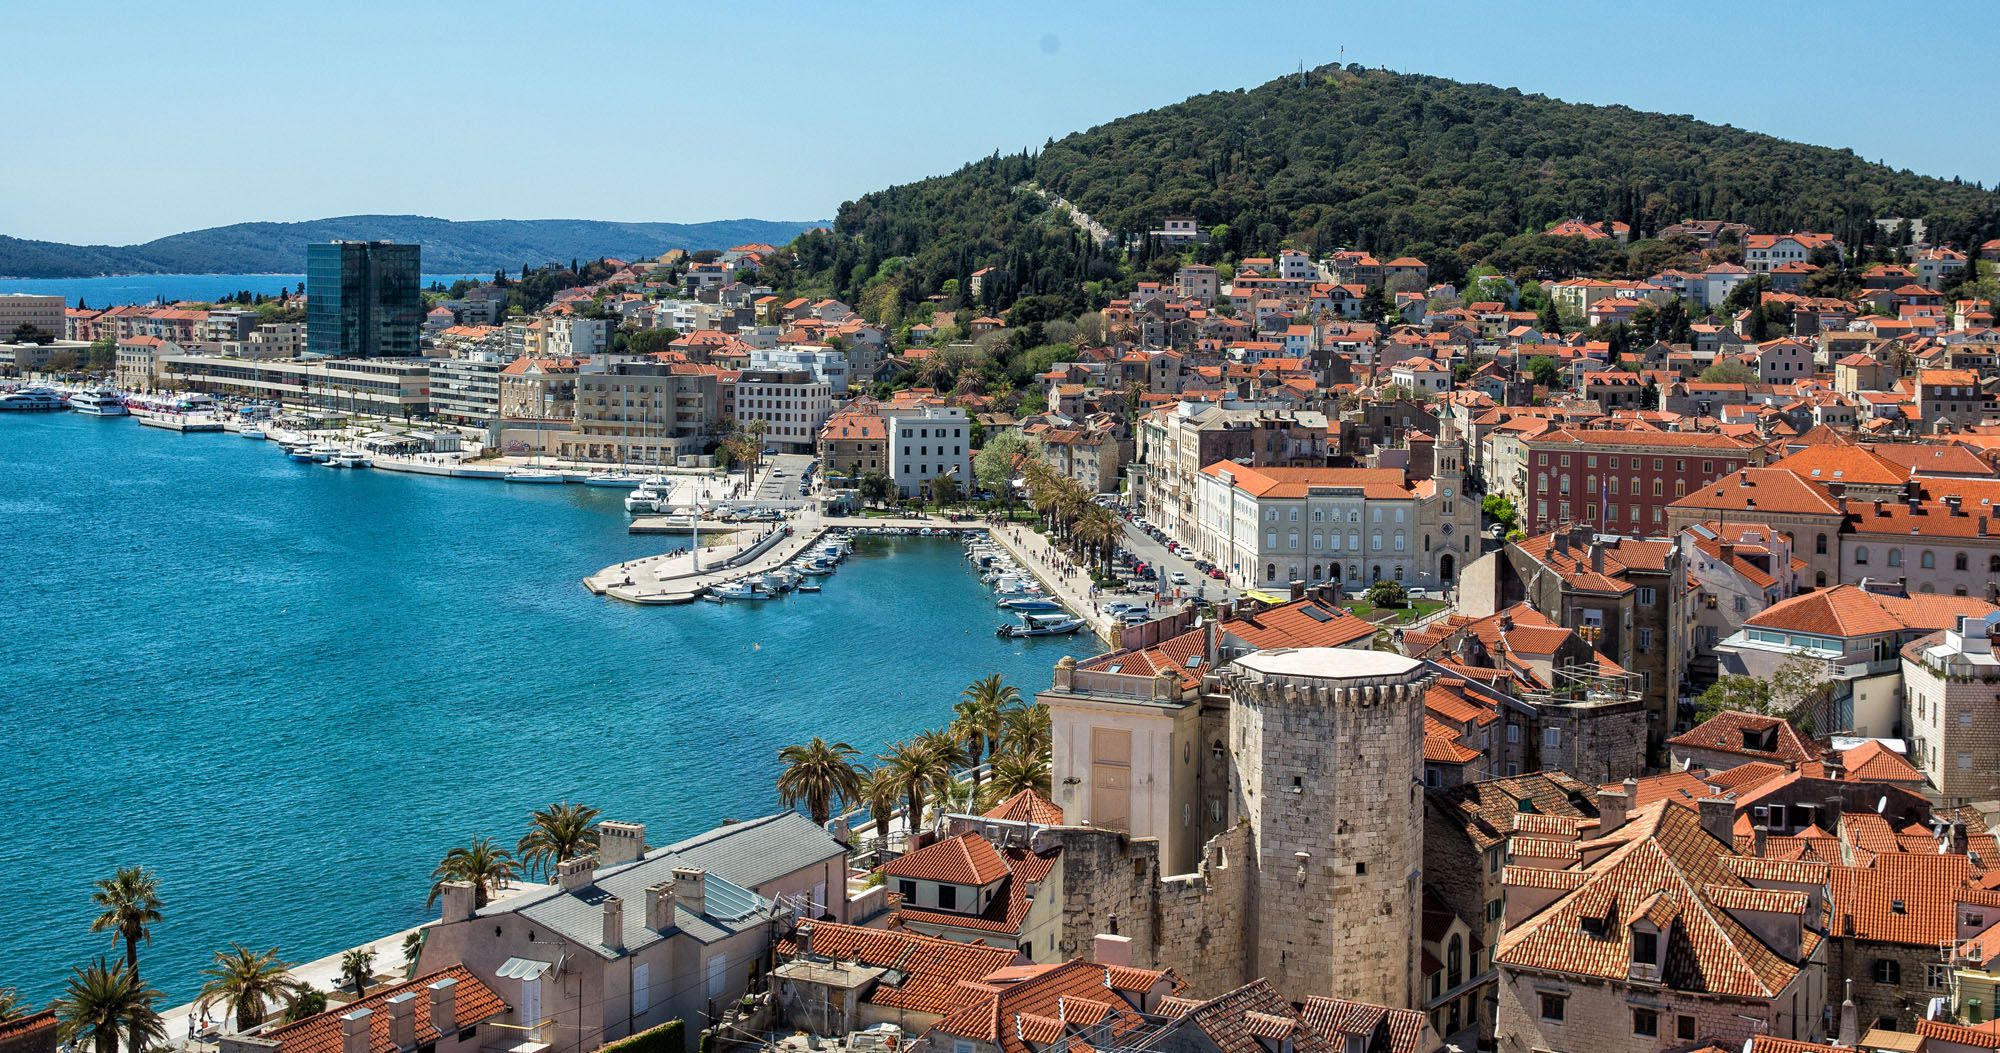 A high view of Split in Croatia